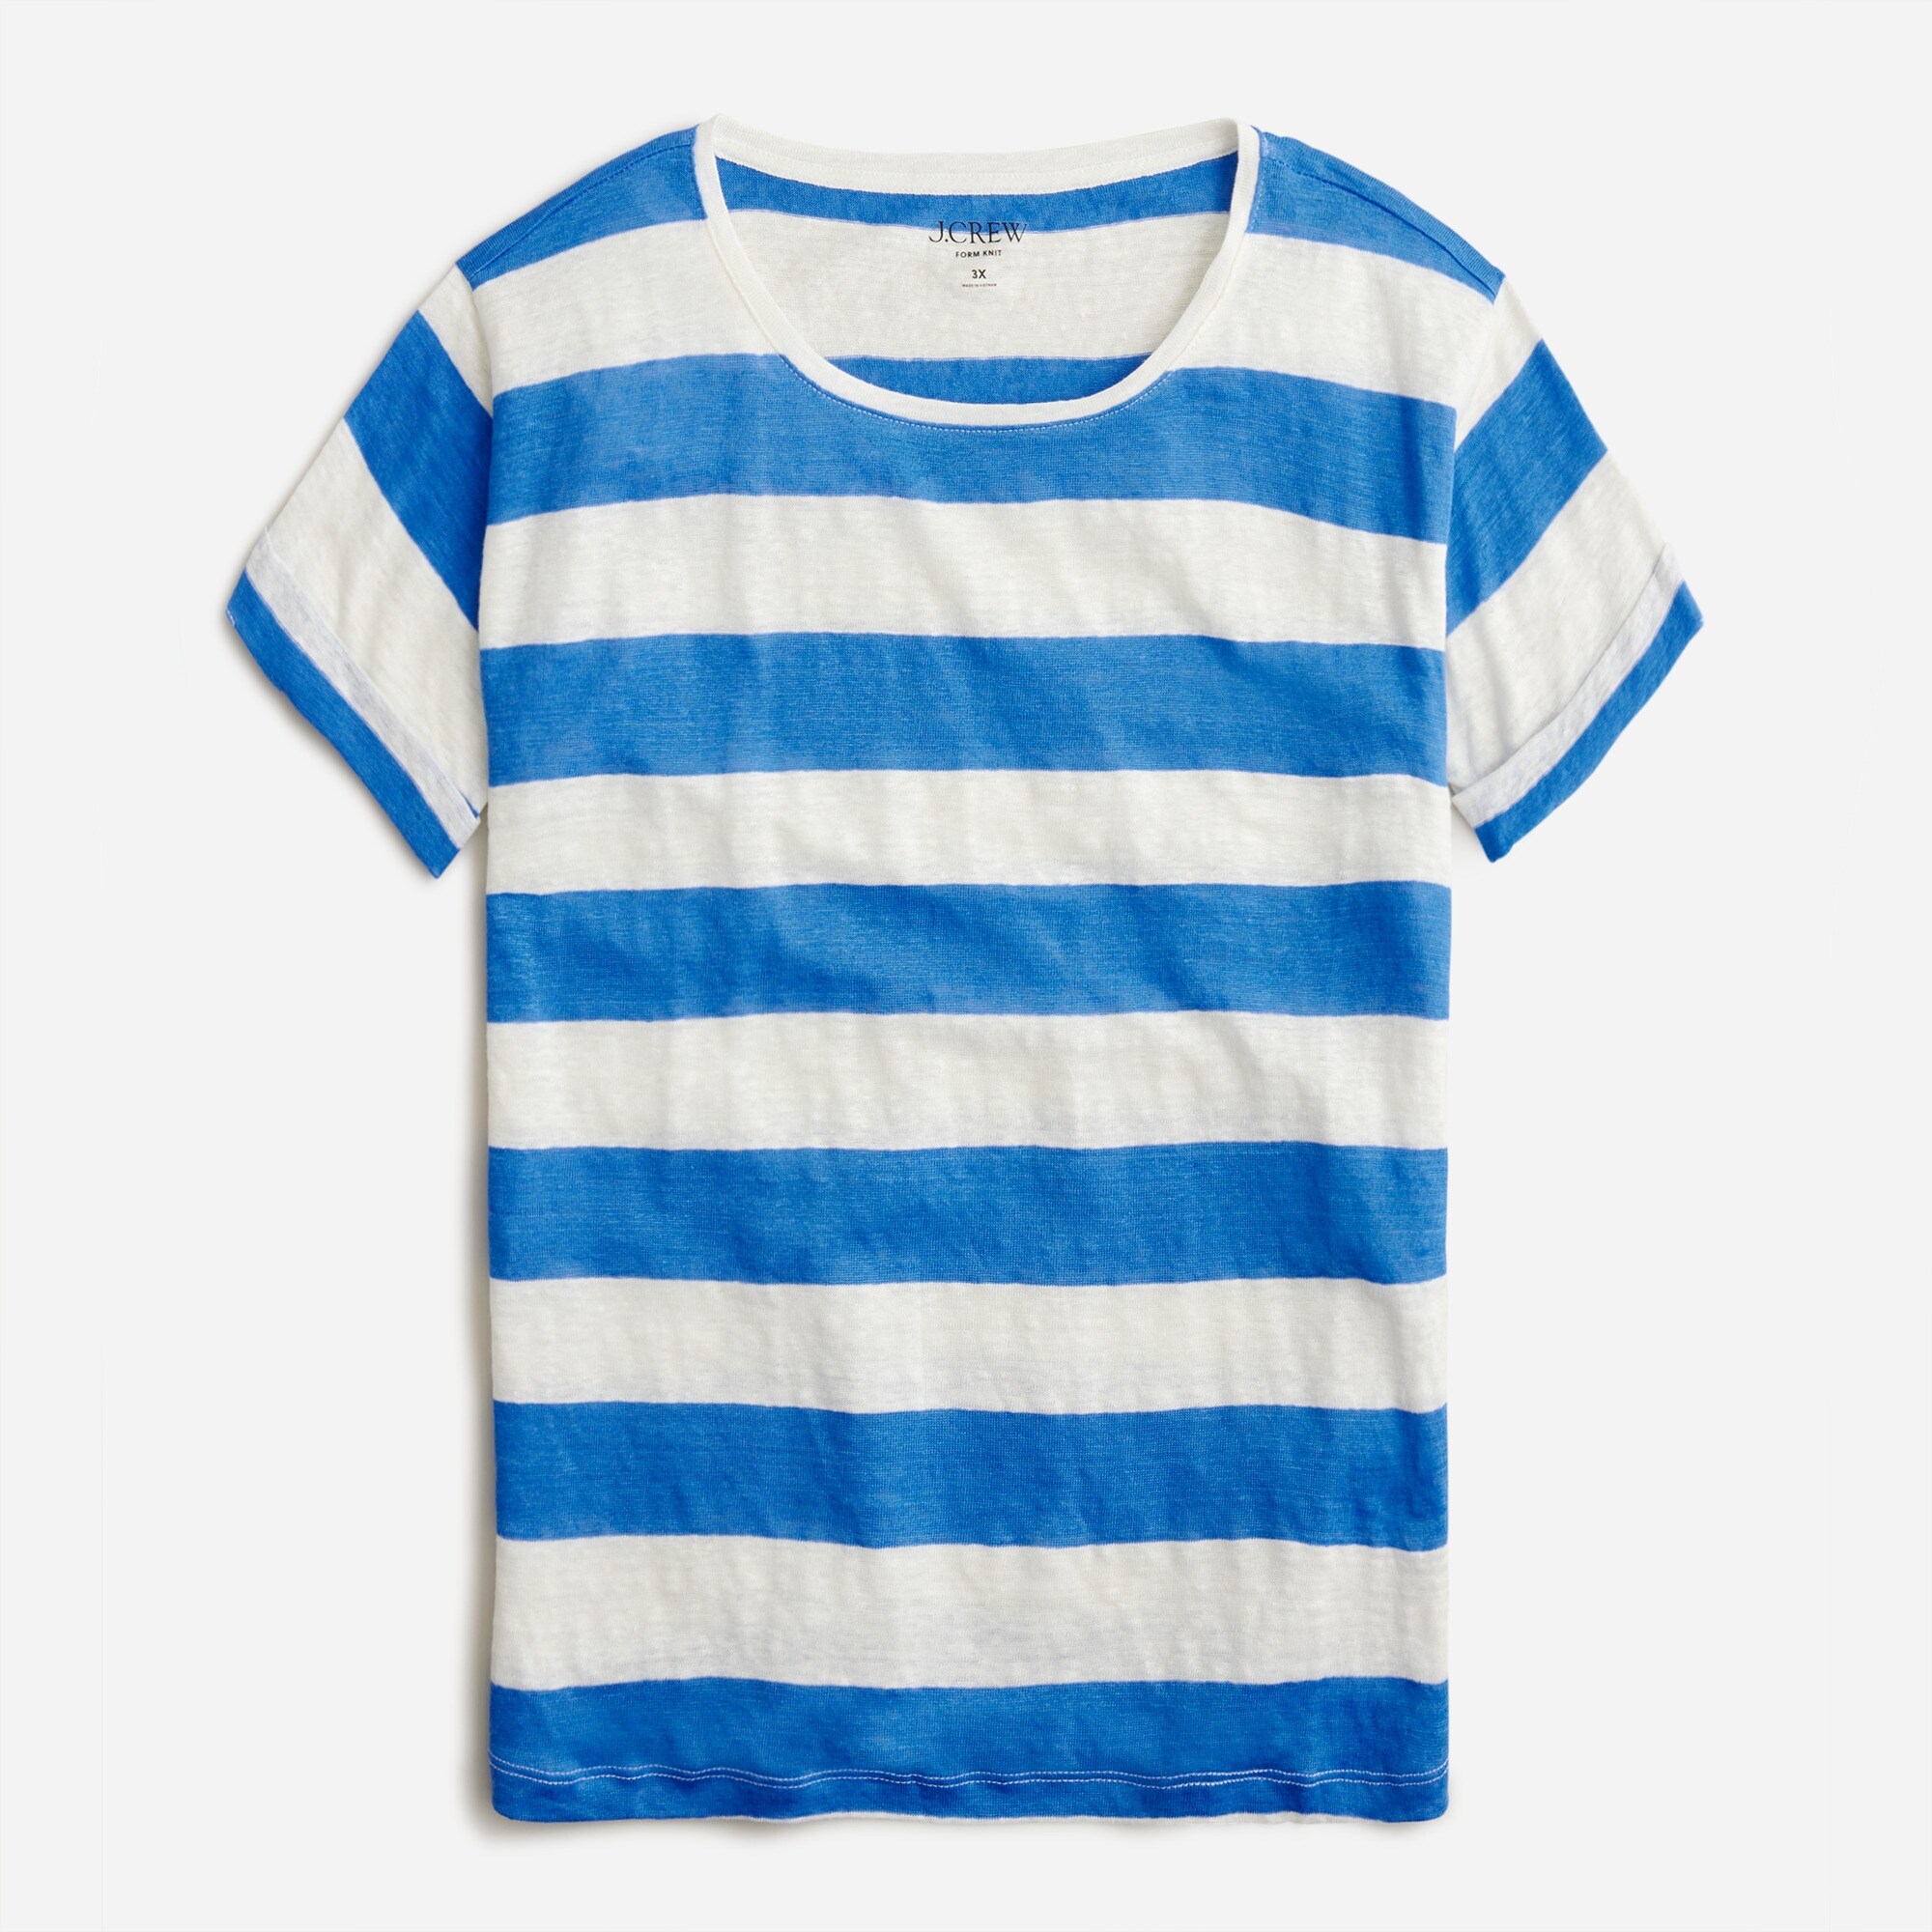  Linen roll-cuff crewneck T-shirt in stripe